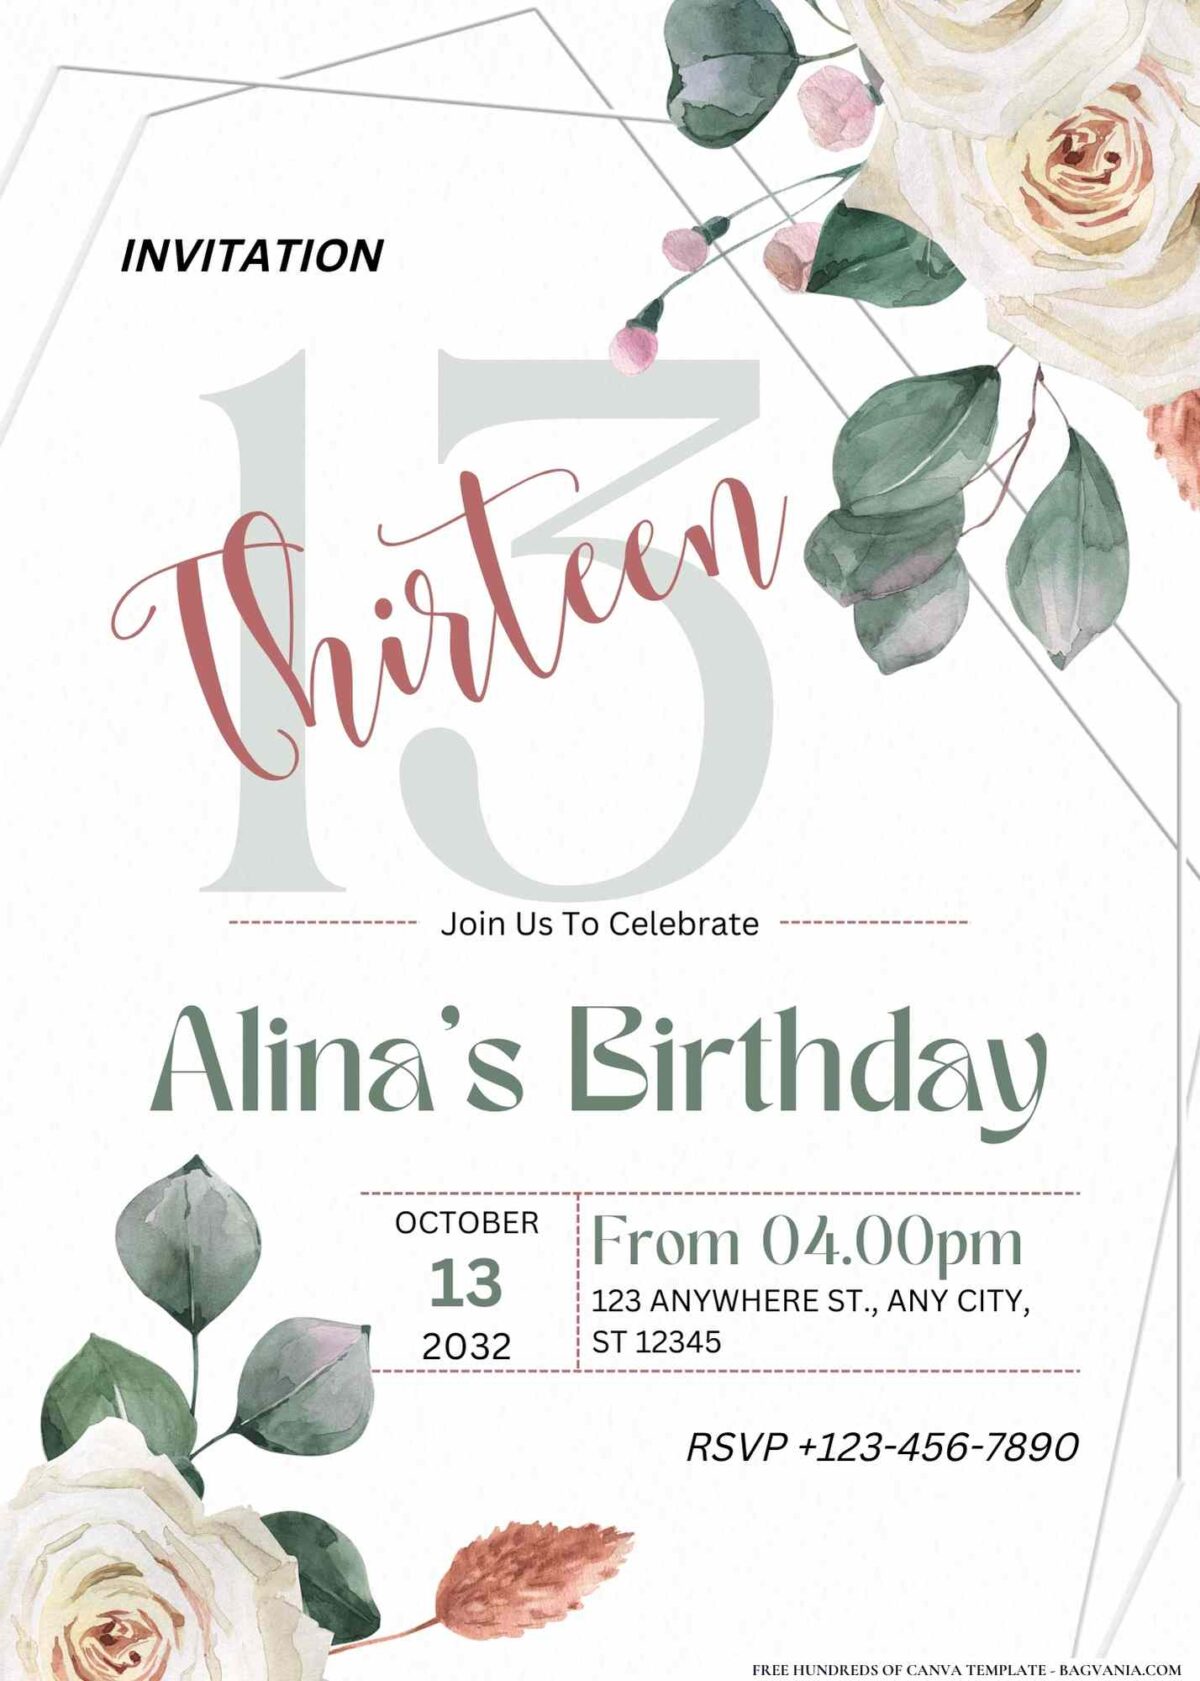 FREE Editable White Roses and Greenery Birthday Invitation